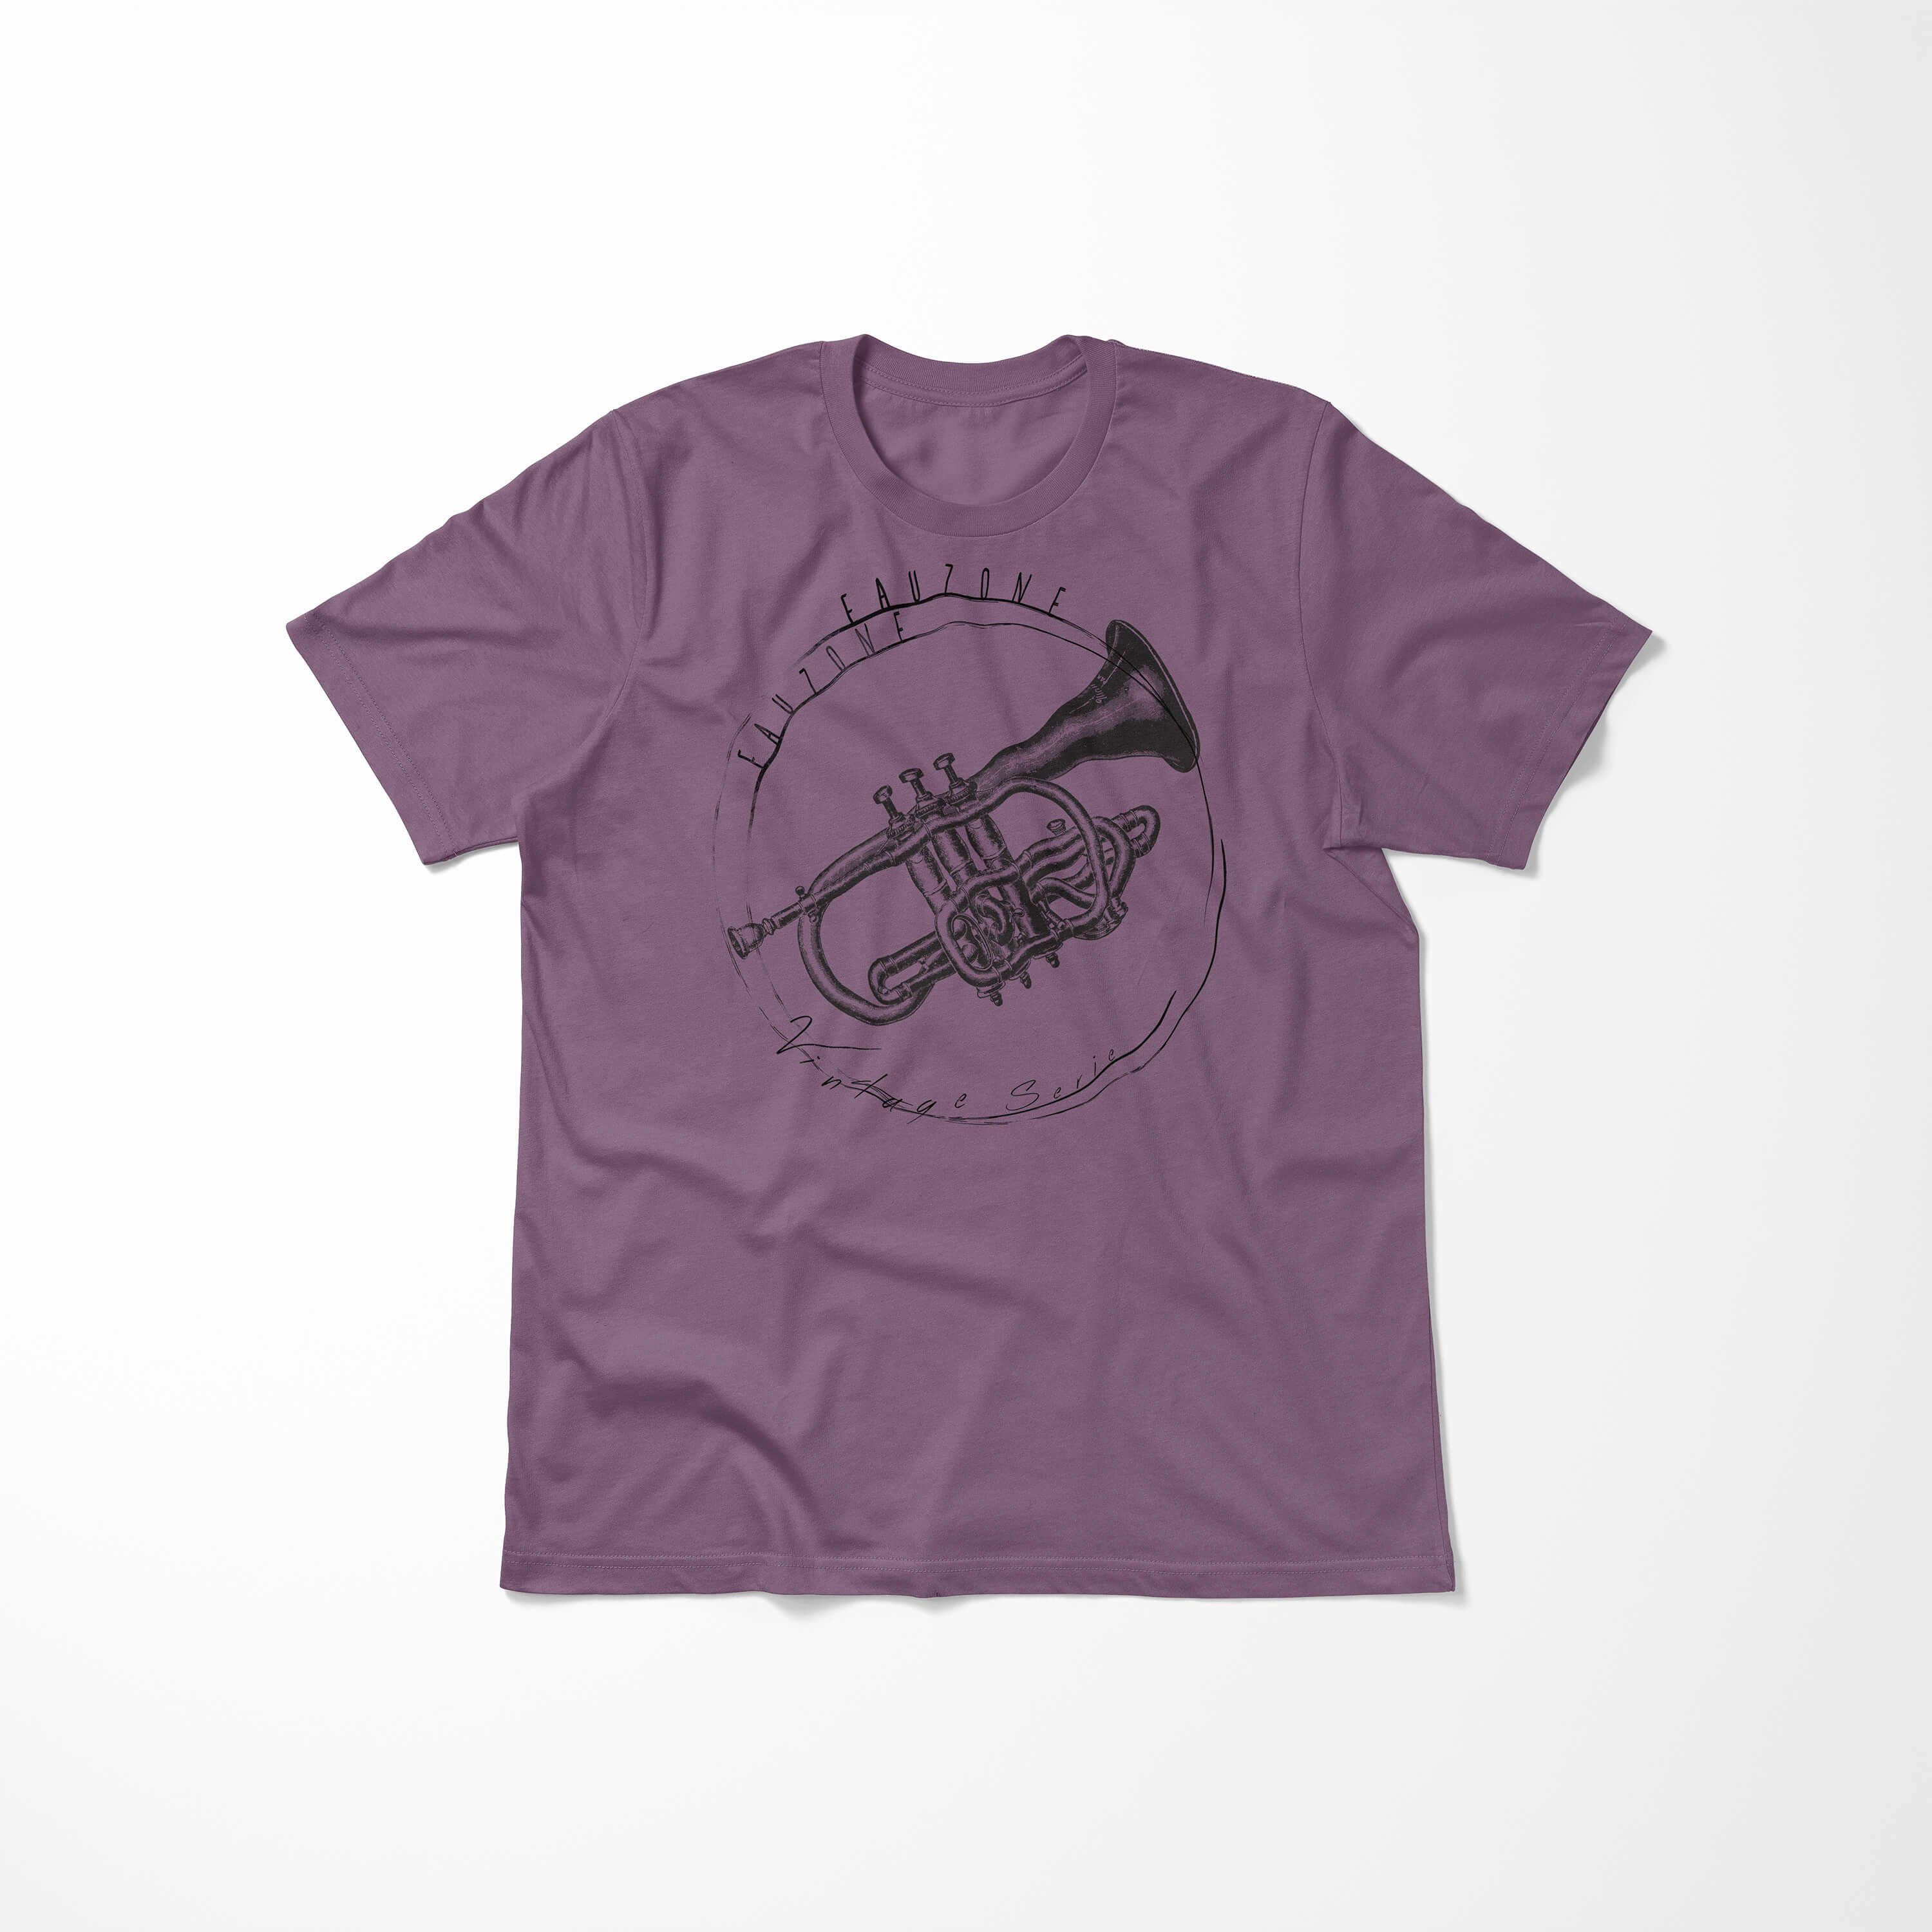 Sinus Art T-Shirt Vintage Trompete Shiraz Herren T-Shirt